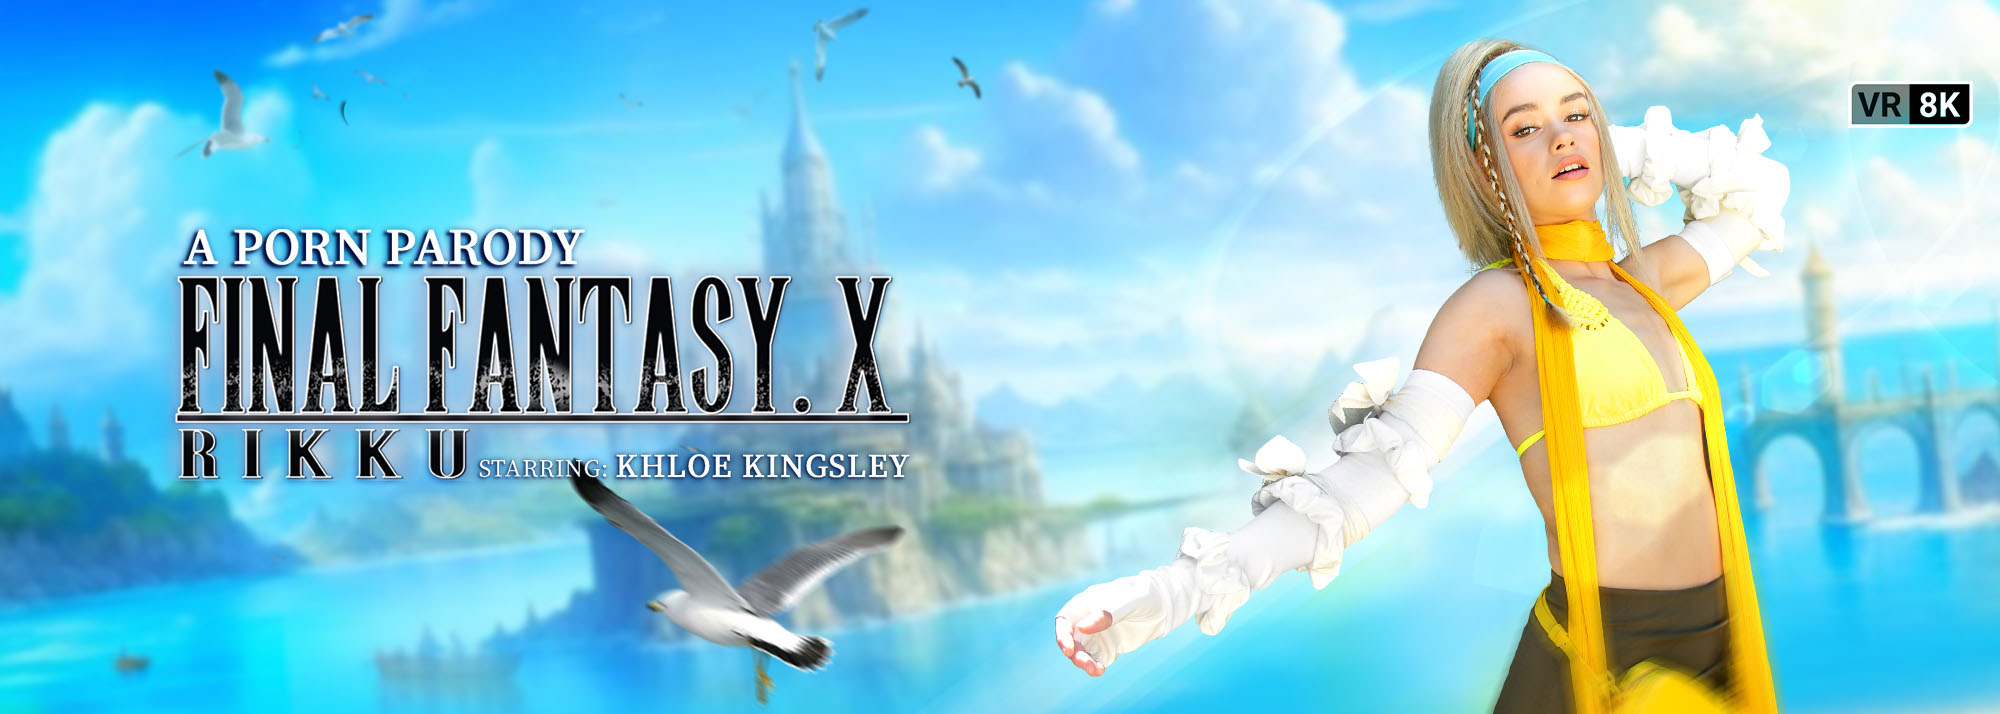 Final Fantasy X: Rikku (A Porn Parody) - VR Video, Starring: Khloe Kingsley